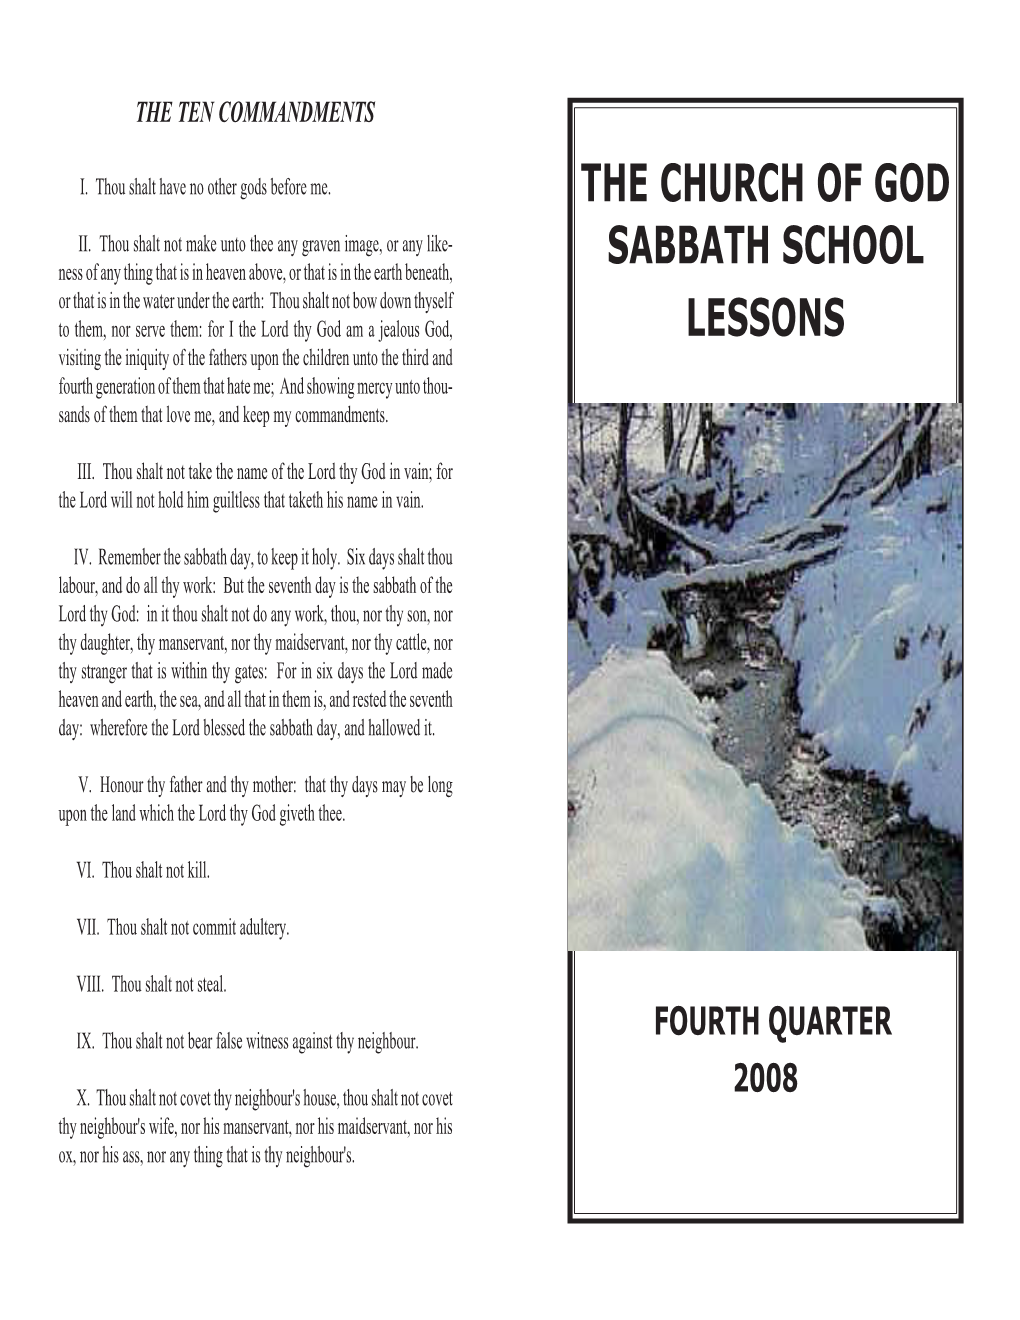 The Church of God Sabbath School Lessons (USPS No